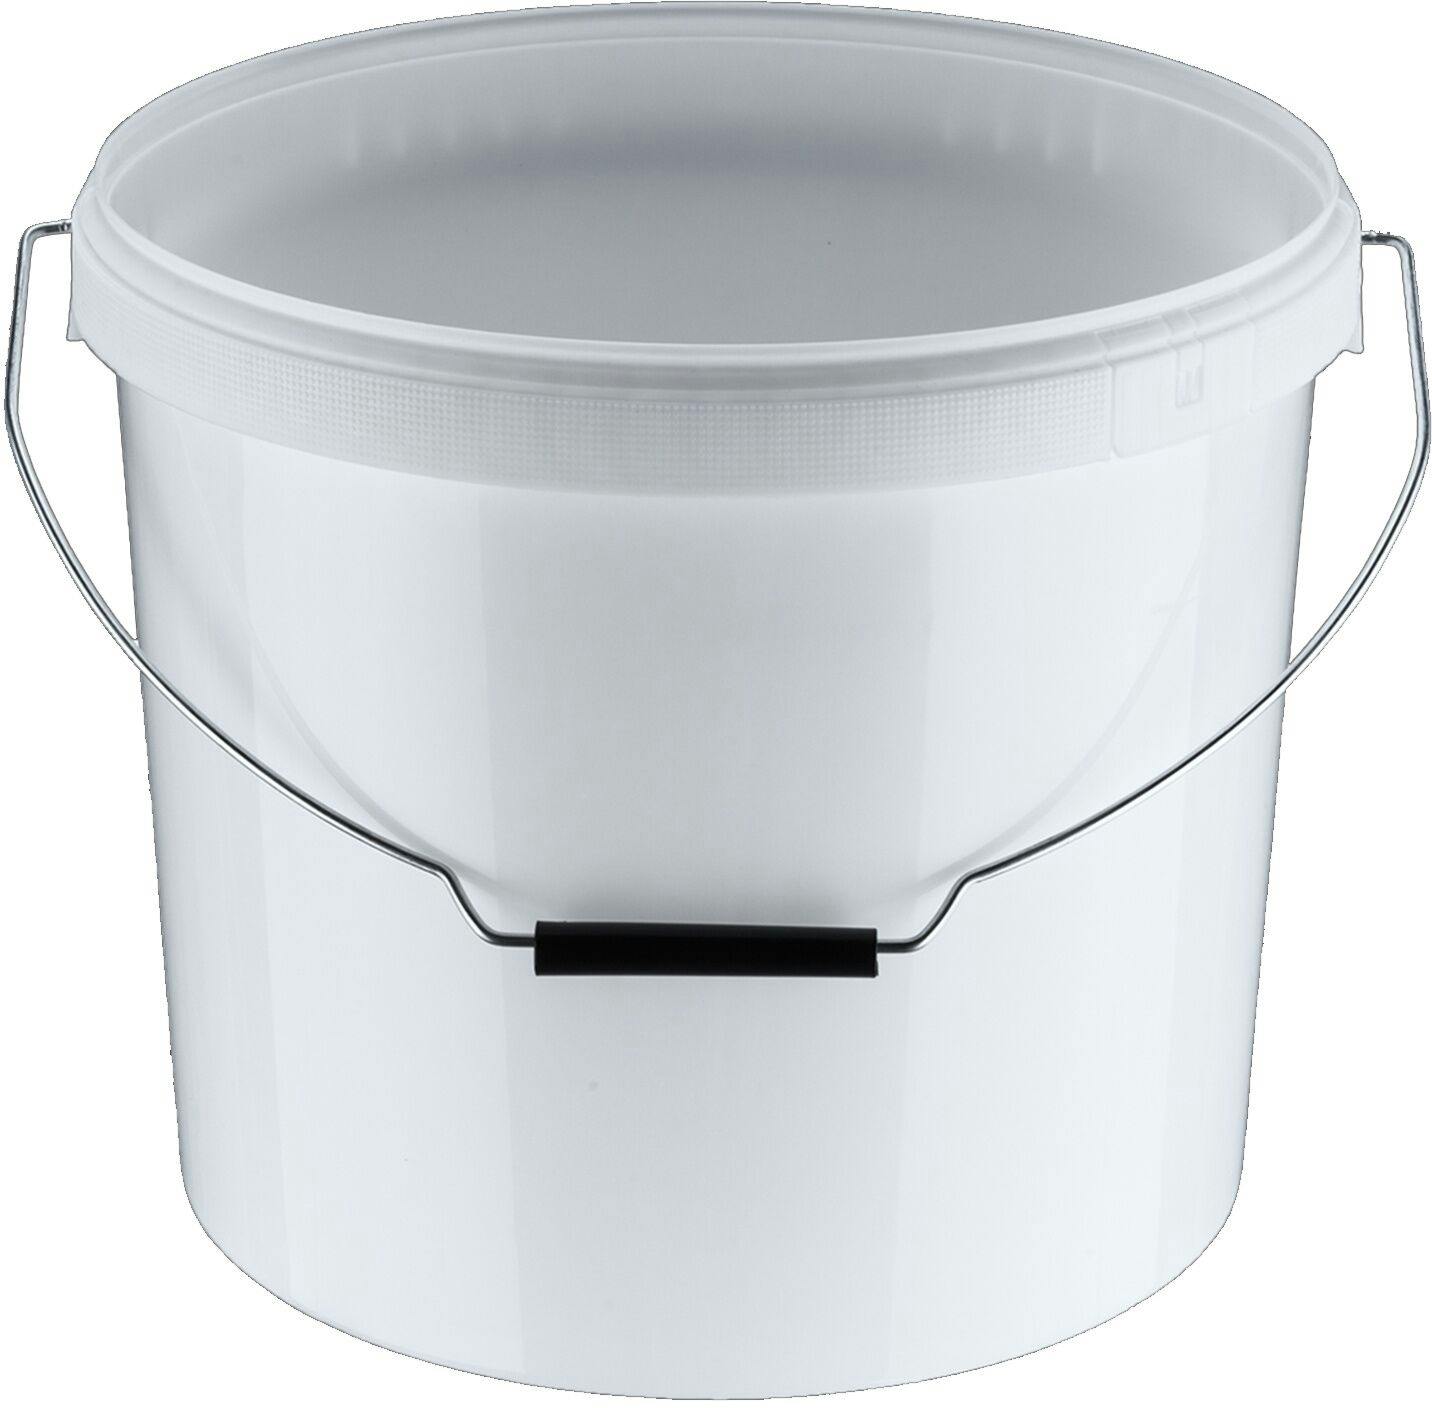 Plastic pail 17 liters White